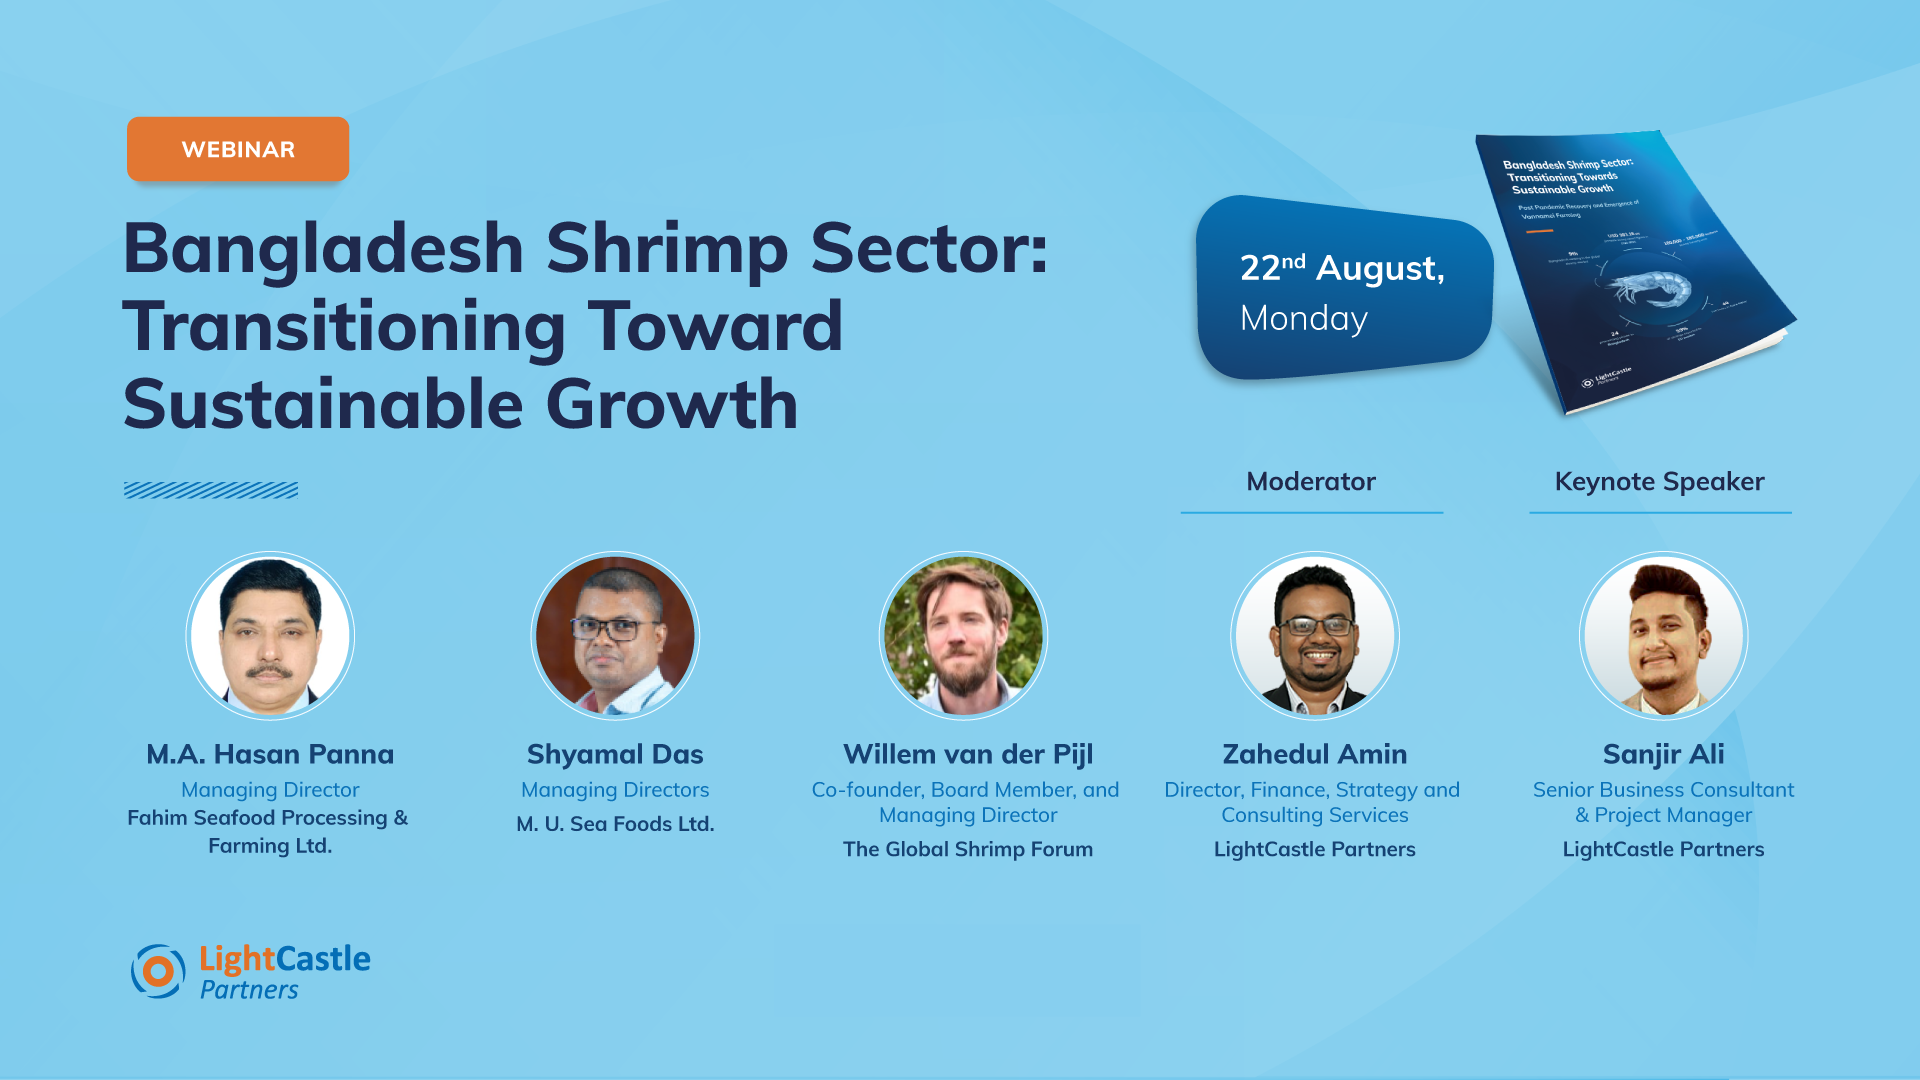 Summary of the Webinar on Bangladesh Shrimp Sector: Transitioning Towards Sustainable Growth